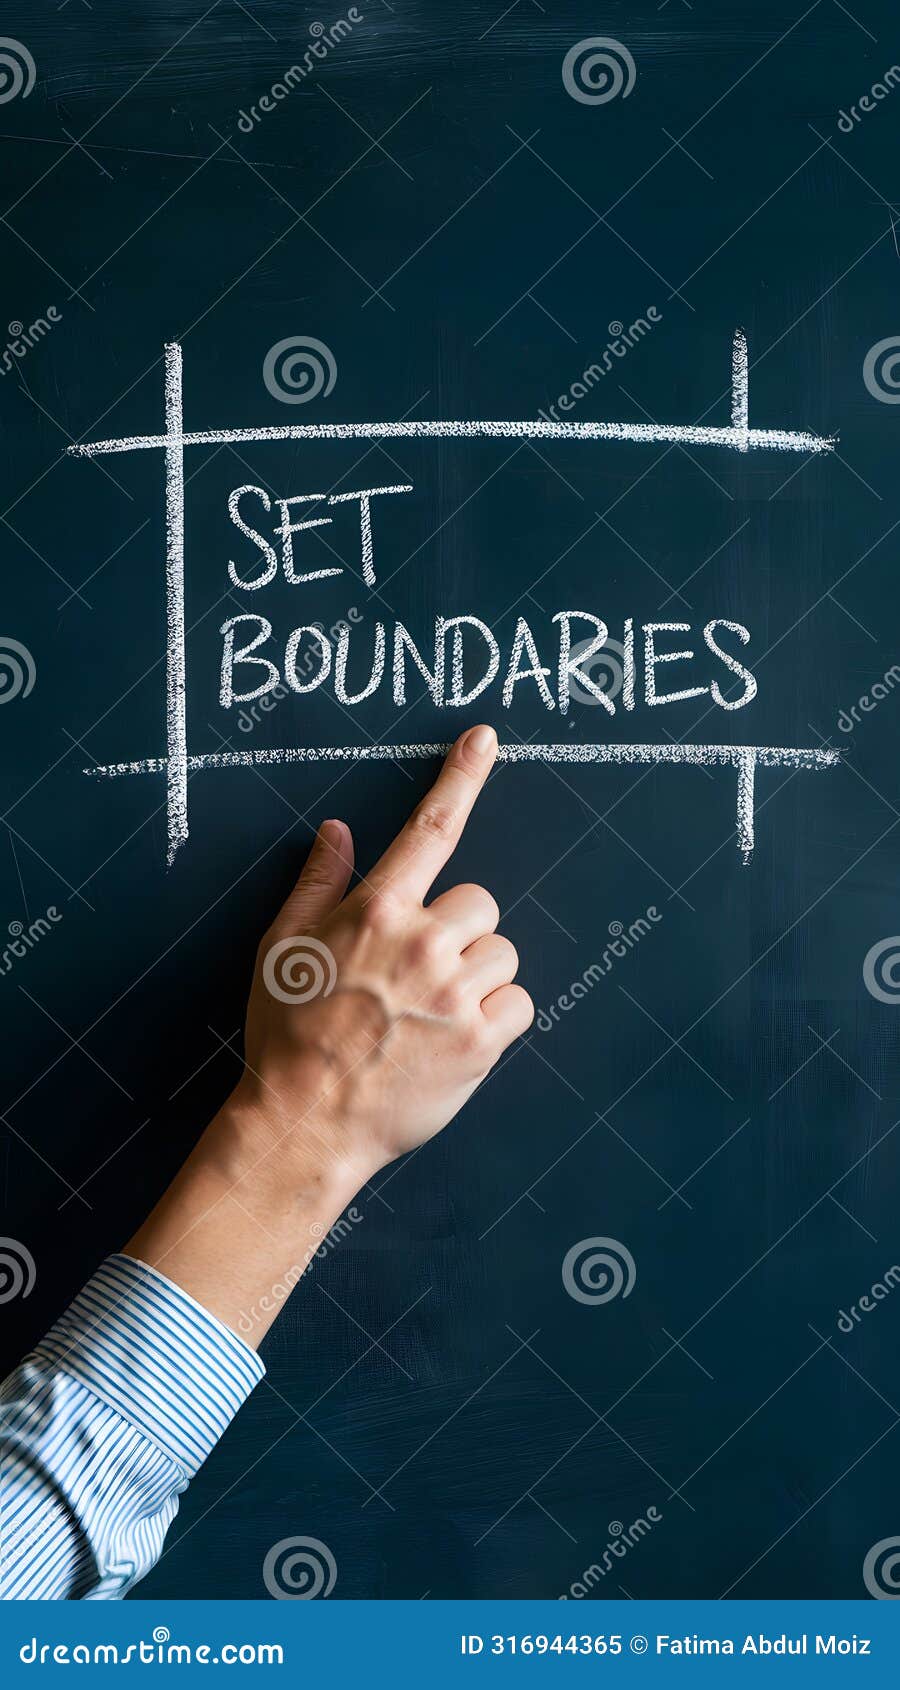 hand points to set boundaries on blackboard, emphasizing limits